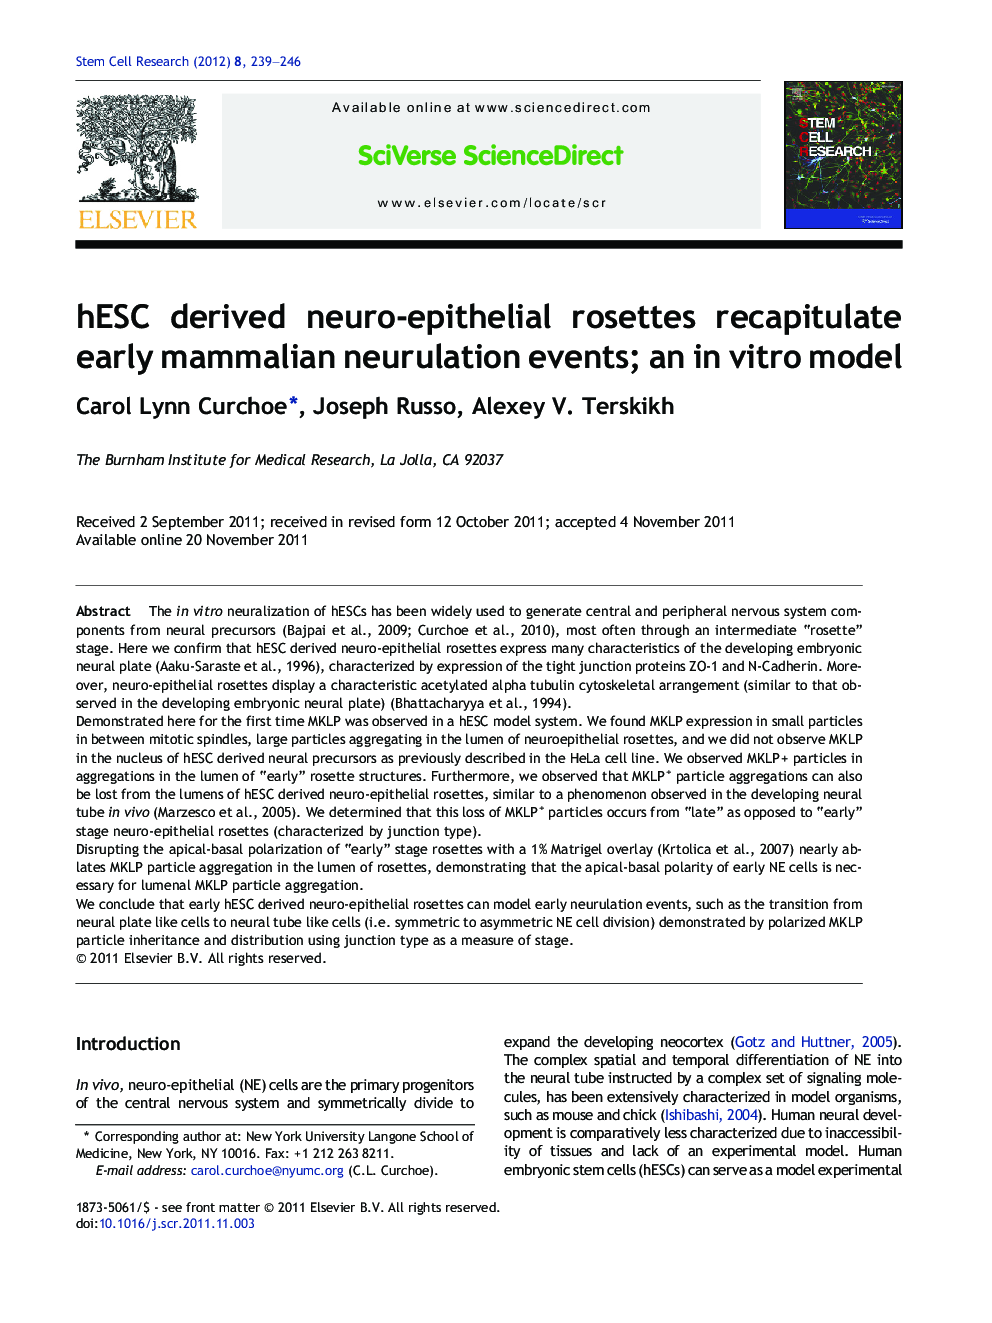 hESC derived neuro-epithelial rosettes recapitulate early mammalian neurulation events; an in vitro model